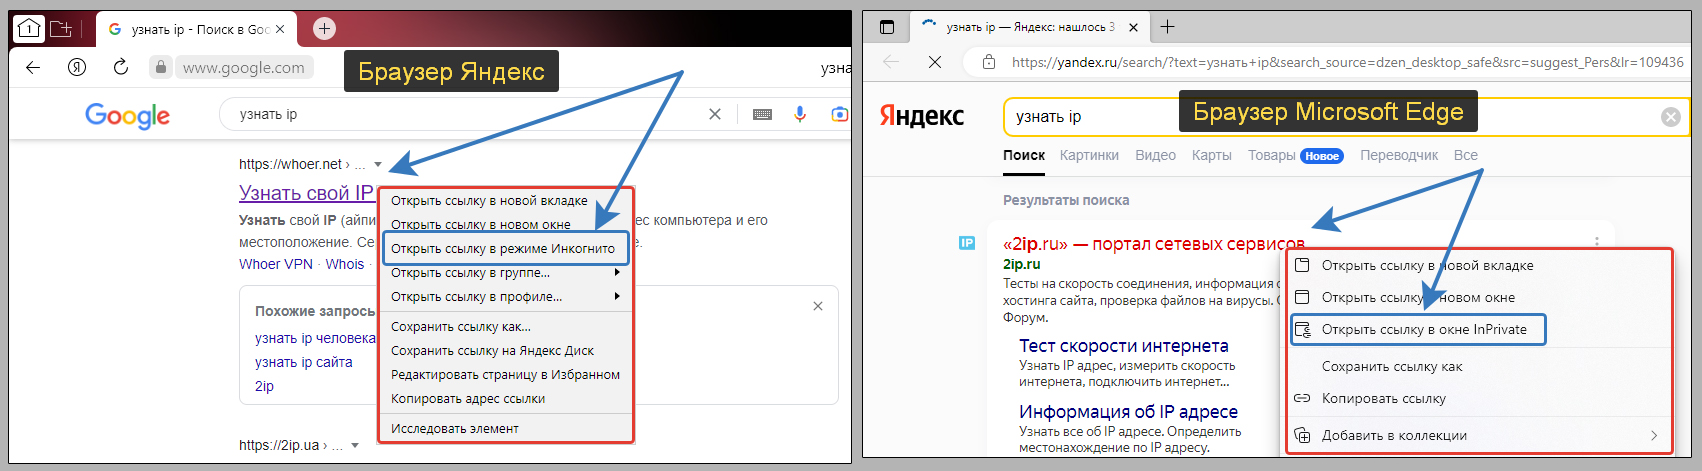 Открытие ссылок в режиме инкогнито (inPrivate) в браузерах Яндекс и Microsoft Edge.